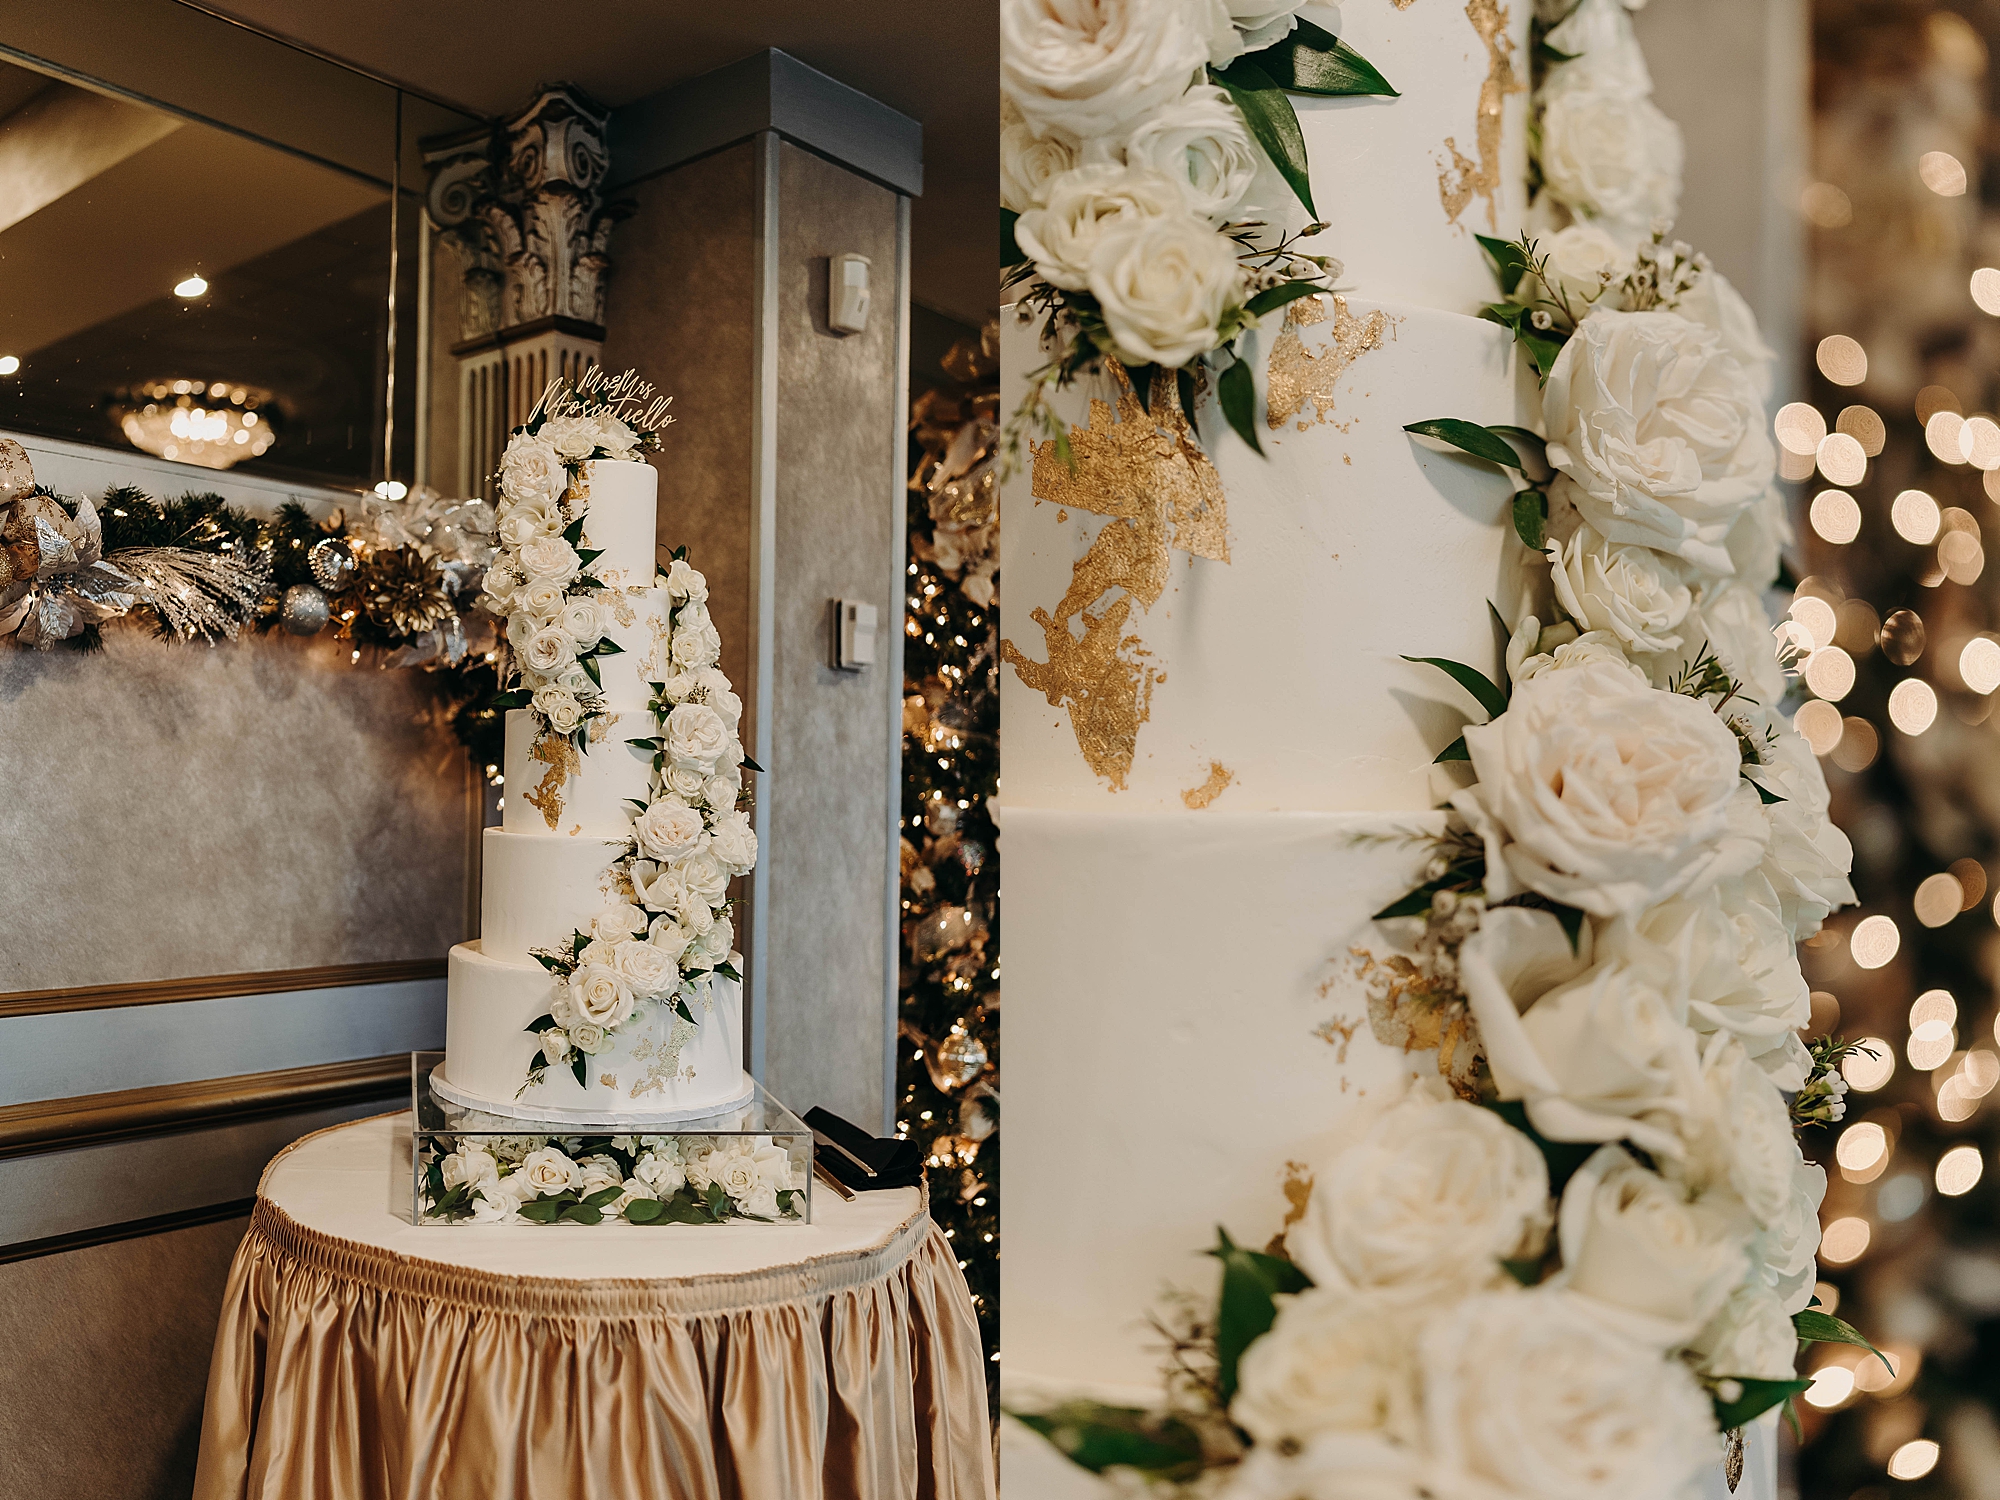 5-tier wedding cake 